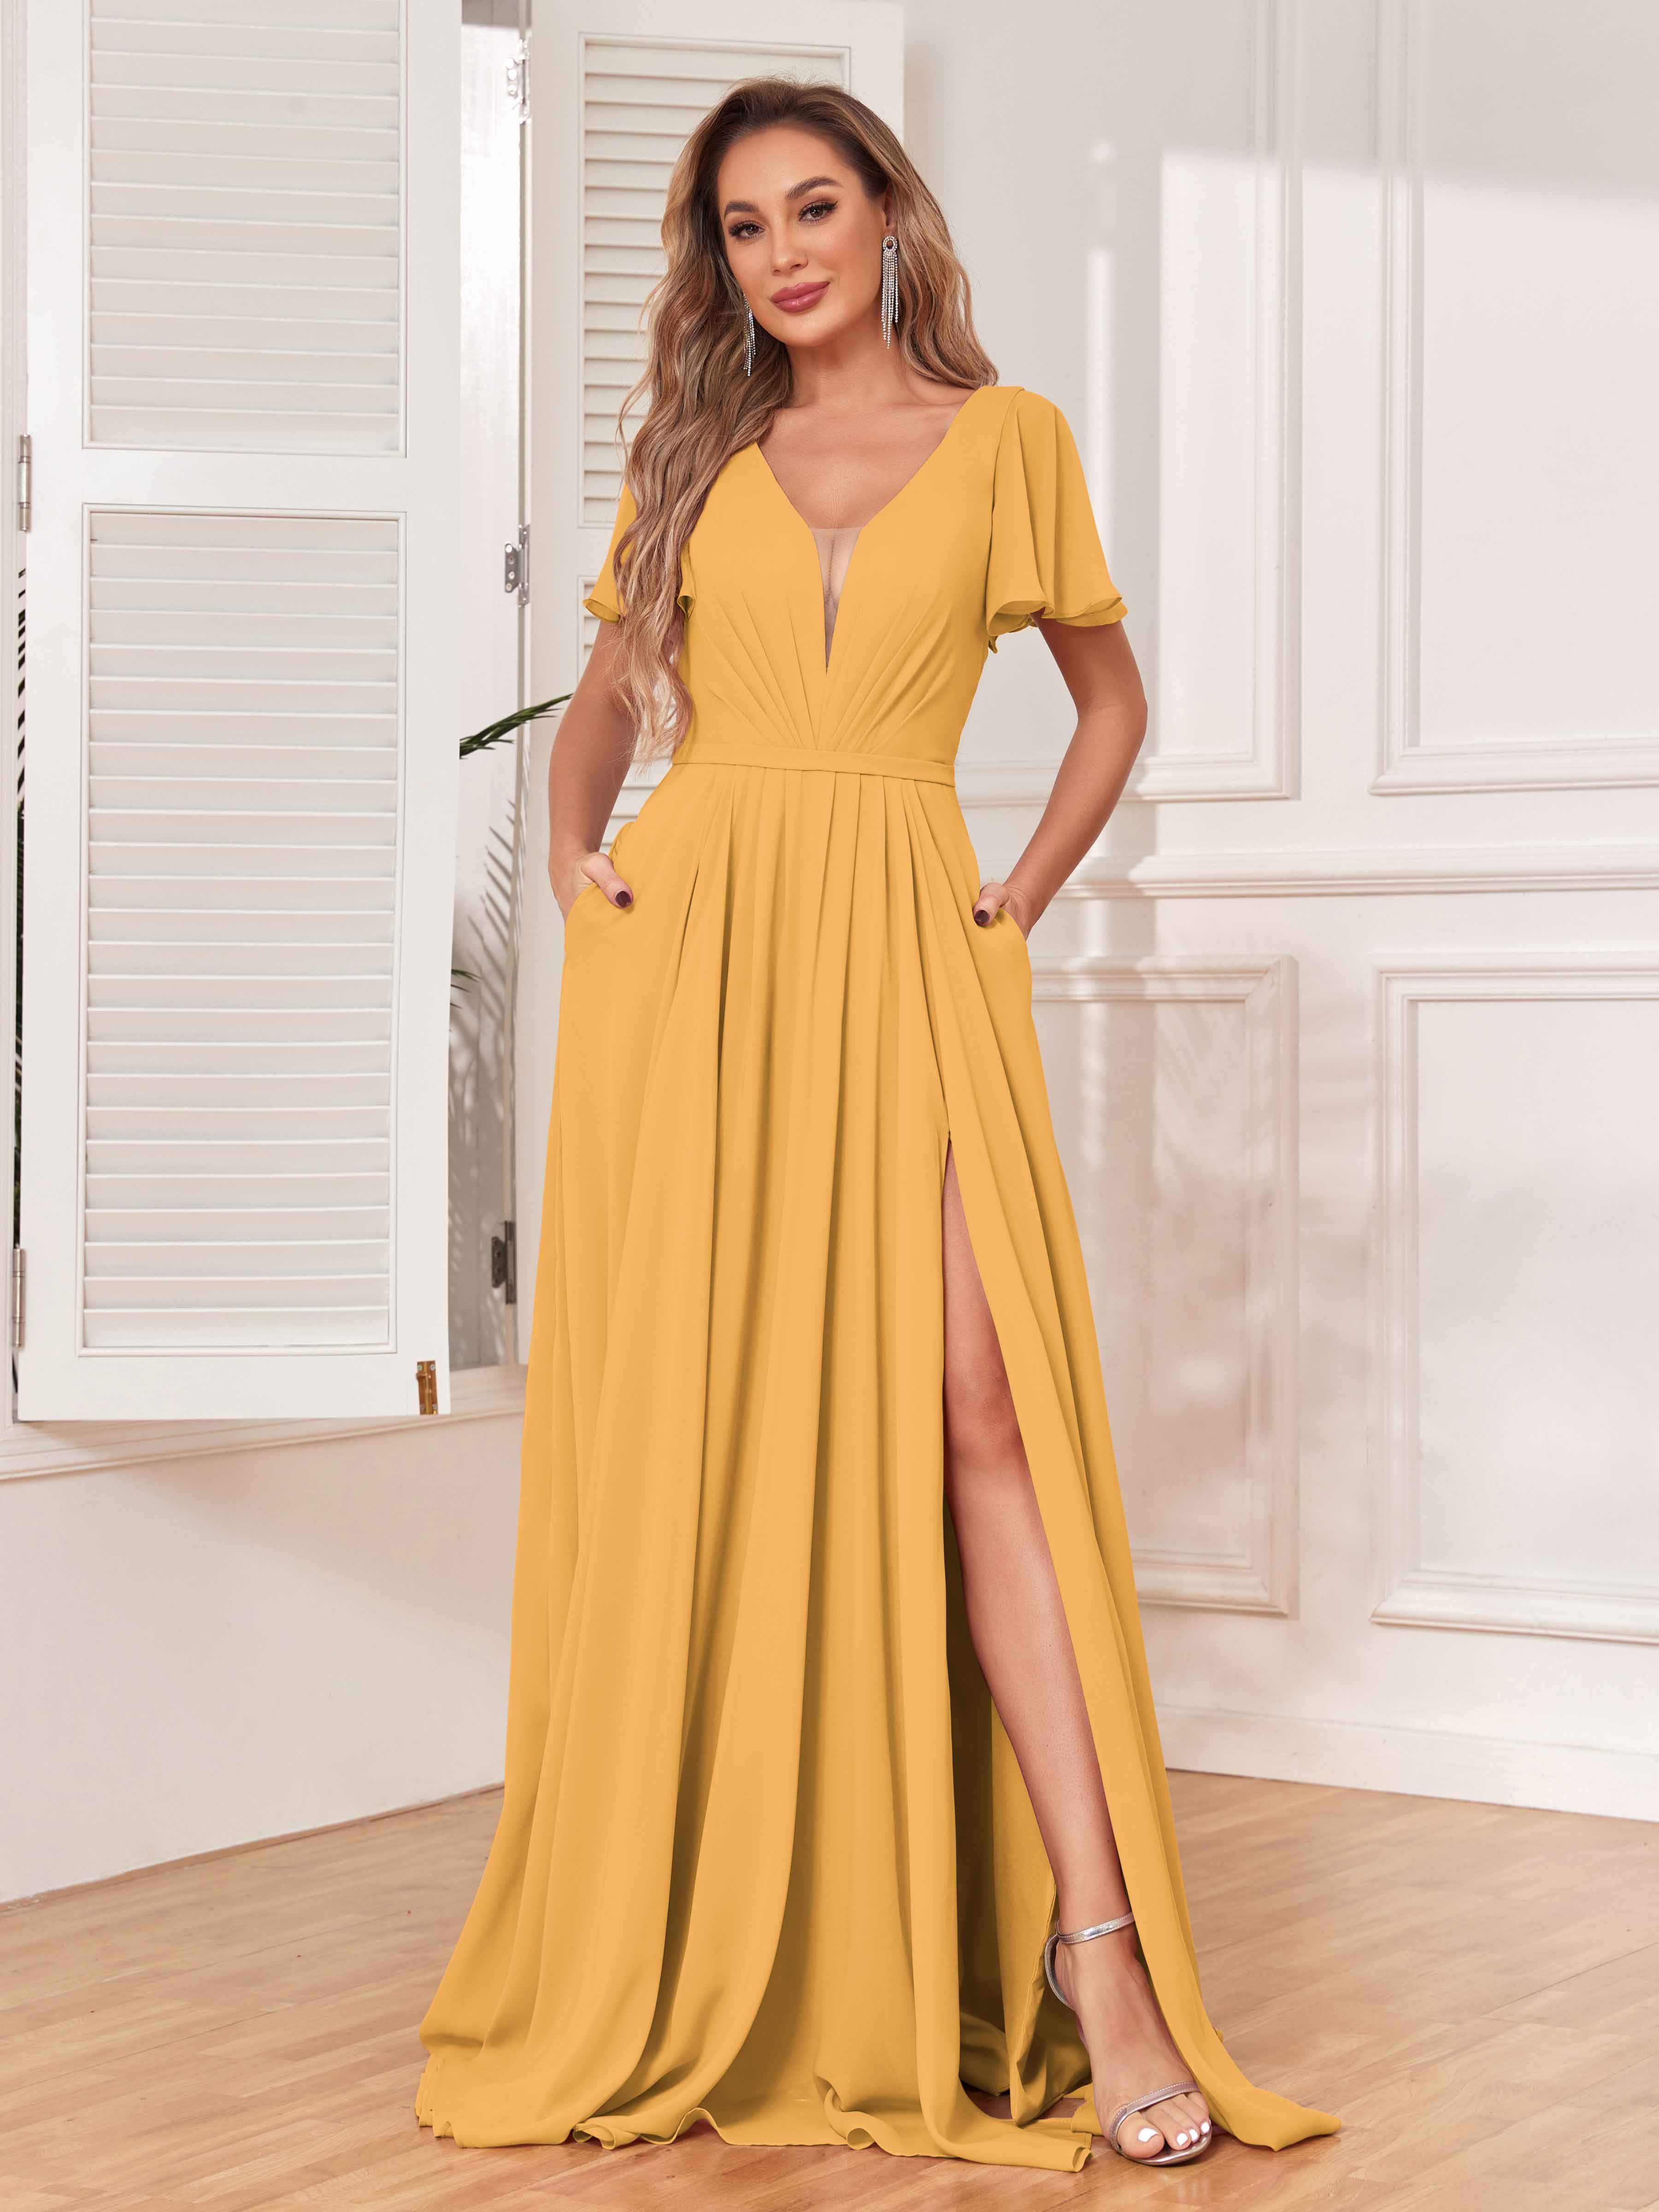 ISO Marfa Dress in Yellow Laurel Canyon Rose or Blue Laurel Canyon Rose,  size XXL DM @bridgetbaldwin if selling! #doen #shopdoen #fors